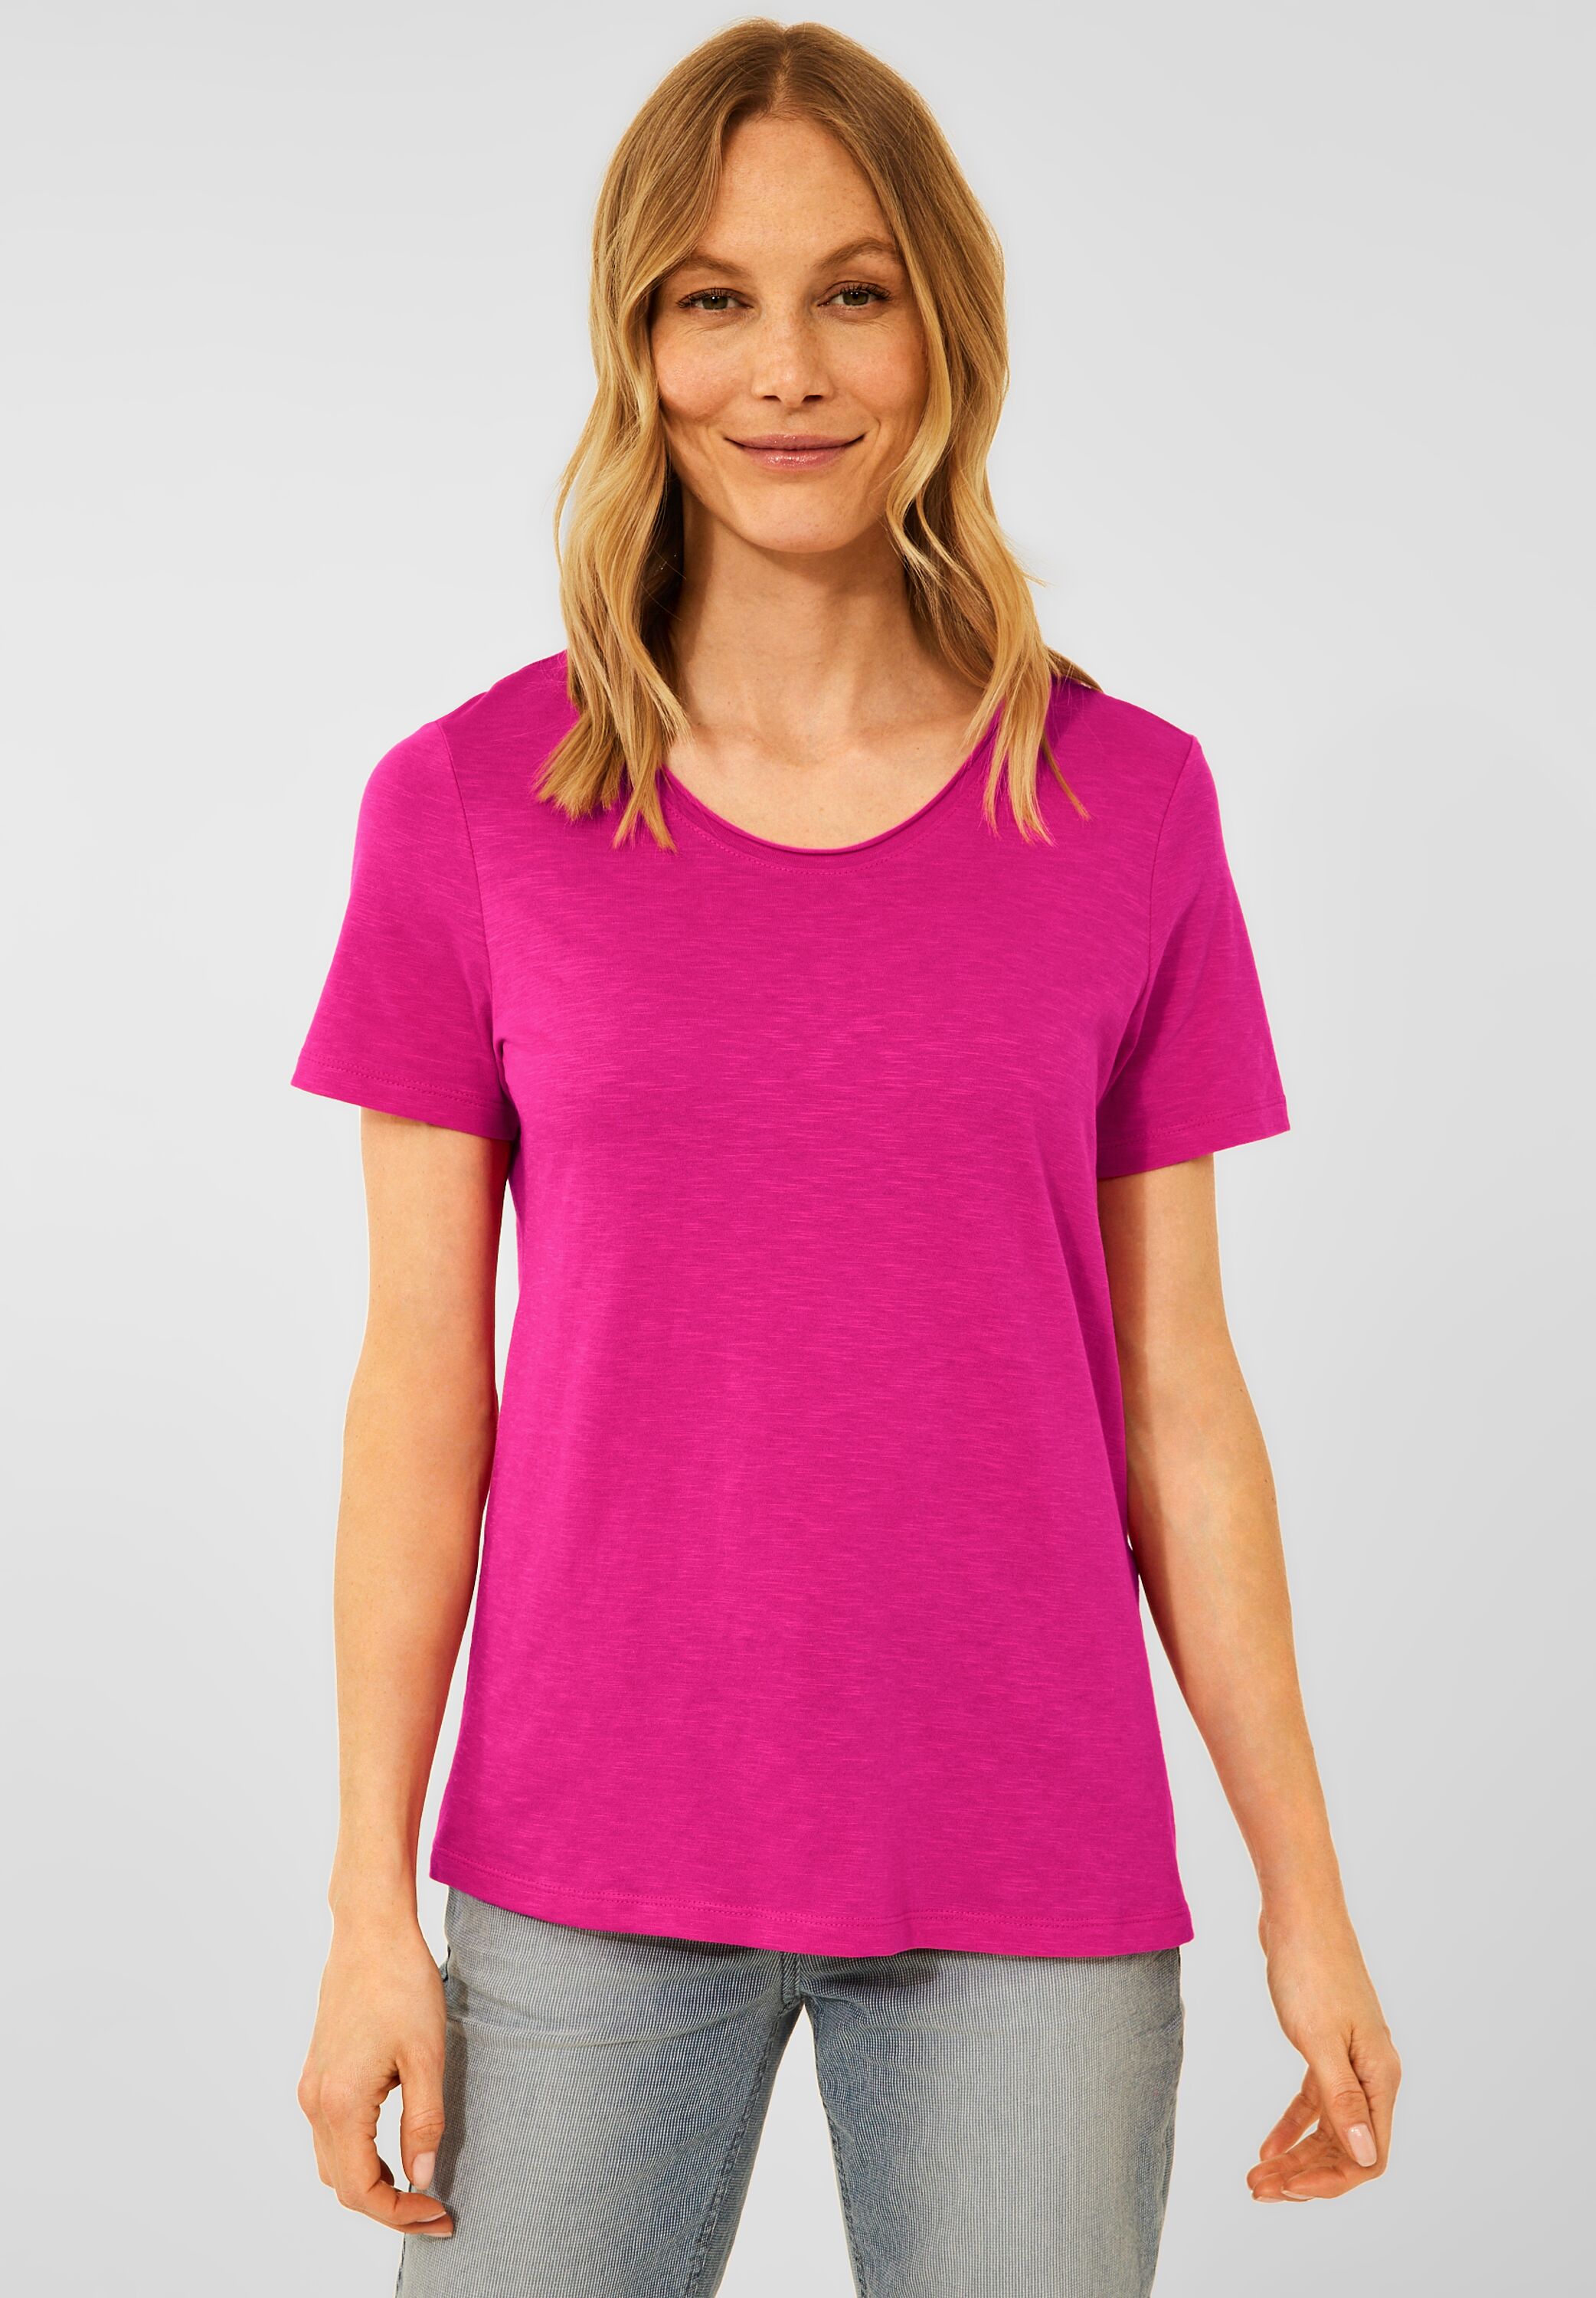 CECIL T-Shirt in Raspberry Pink im SALE reduziert B317596-13822 - CONCEPT  Mode